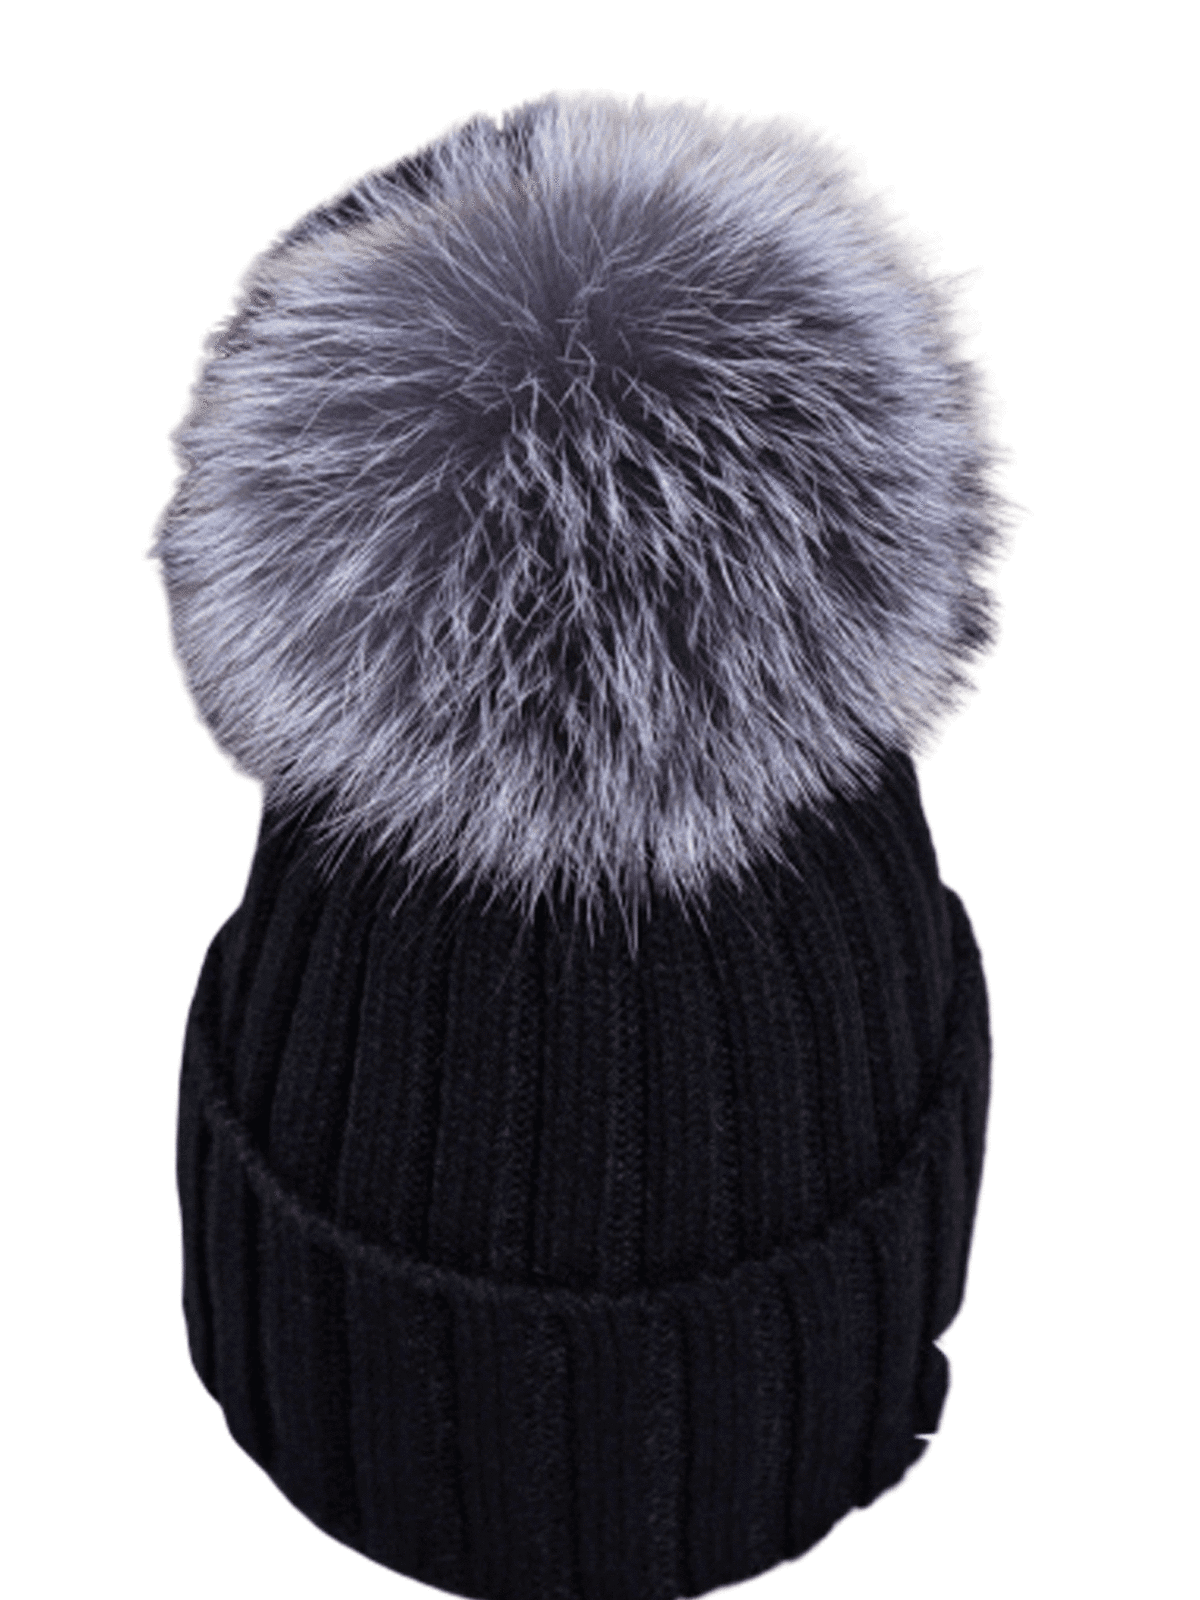 Pompom hat knitting kit with faux fur pompom 